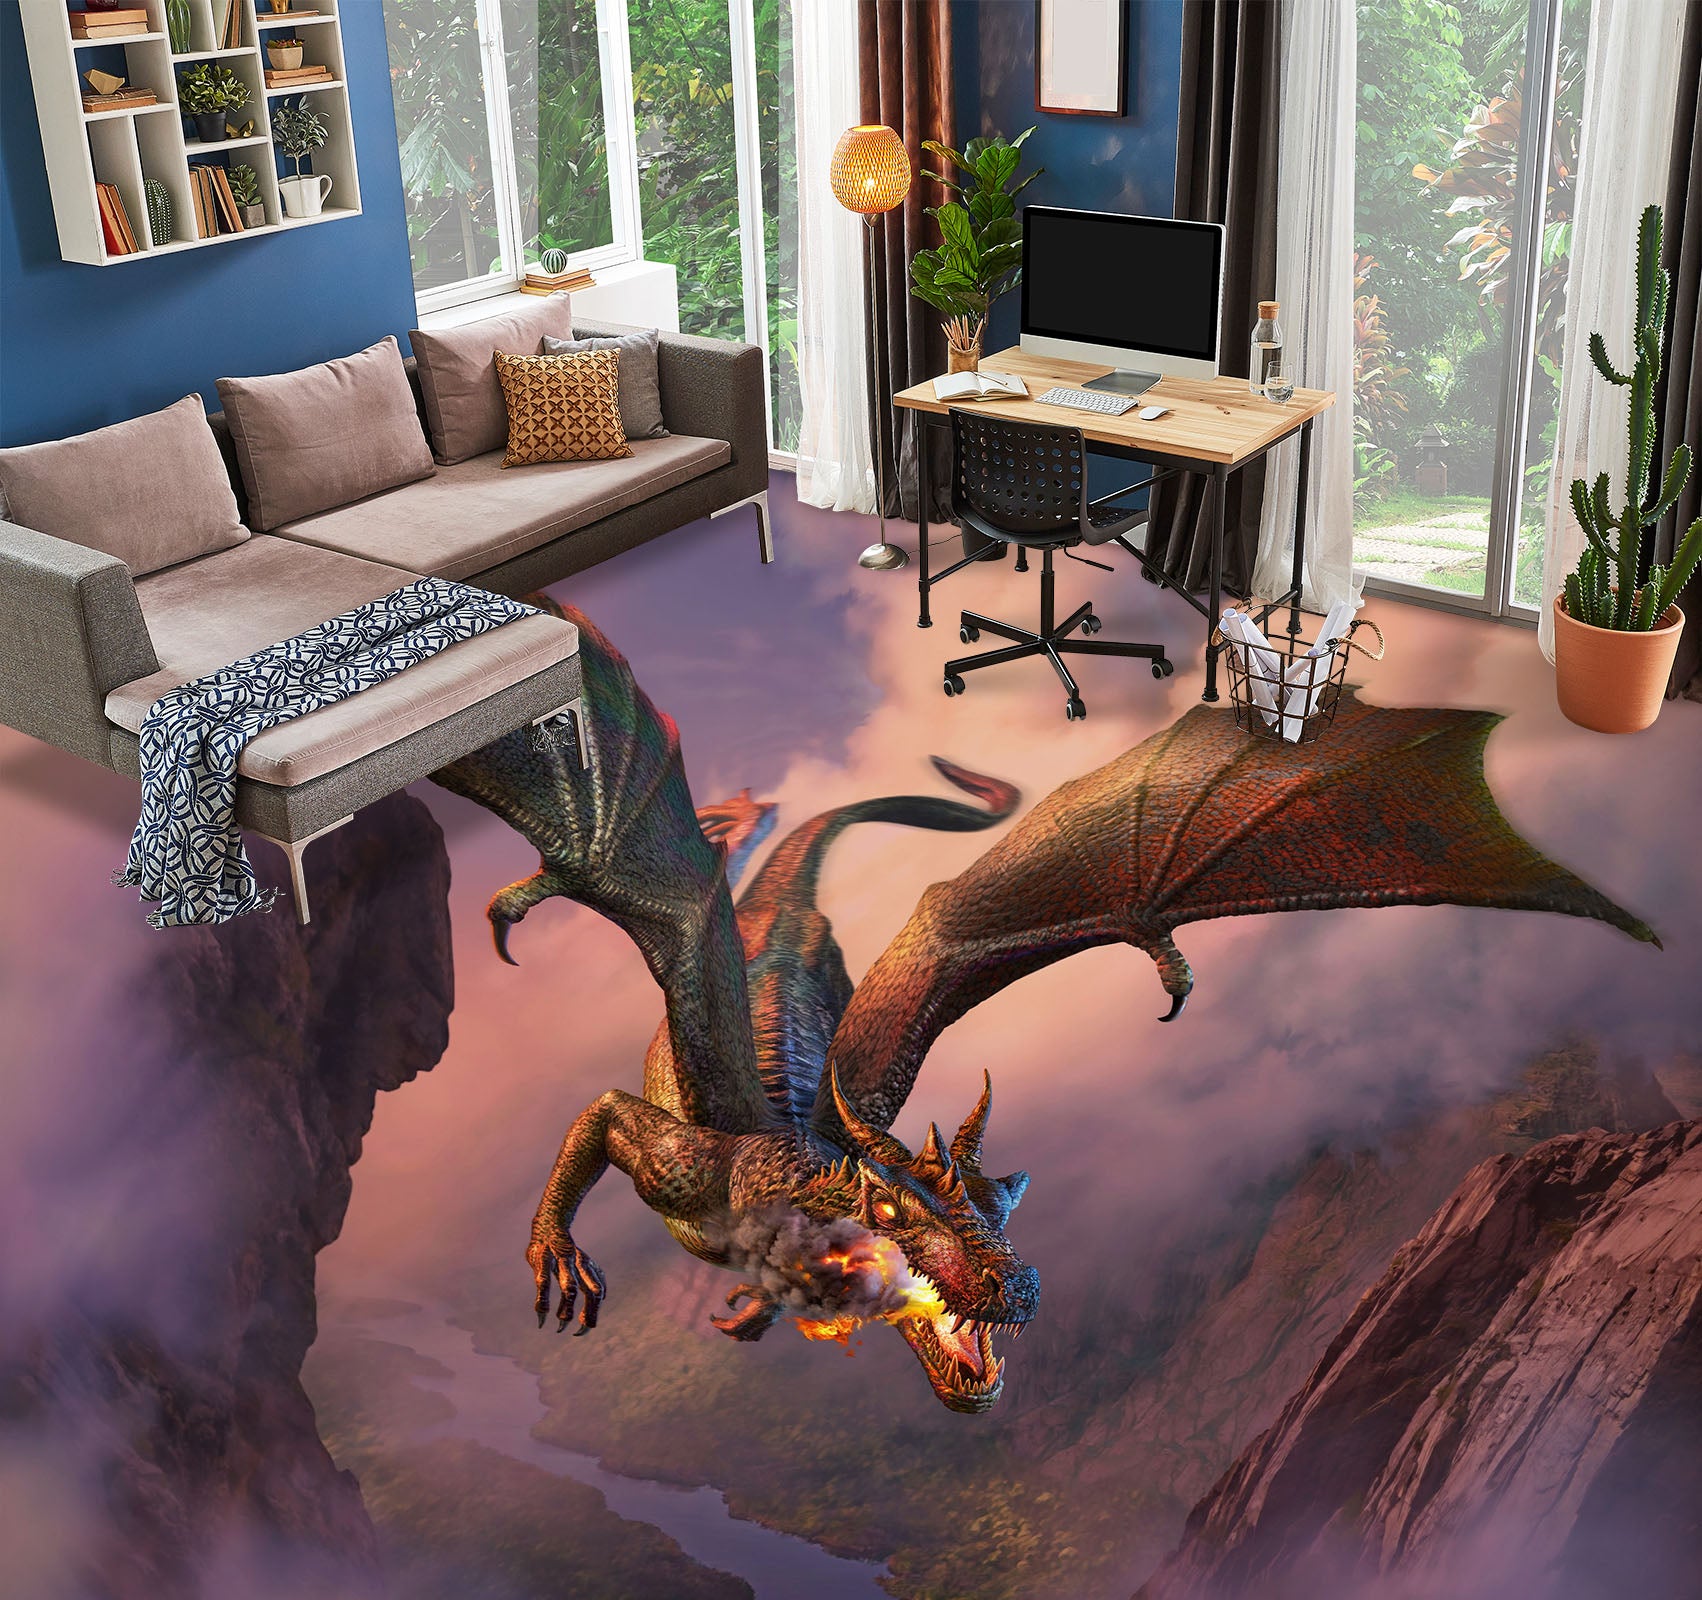 3D Flying Dragon 96219 Jerry LoFaro Floor Mural  Wallpaper Murals Self-Adhesive Removable Print Epoxy